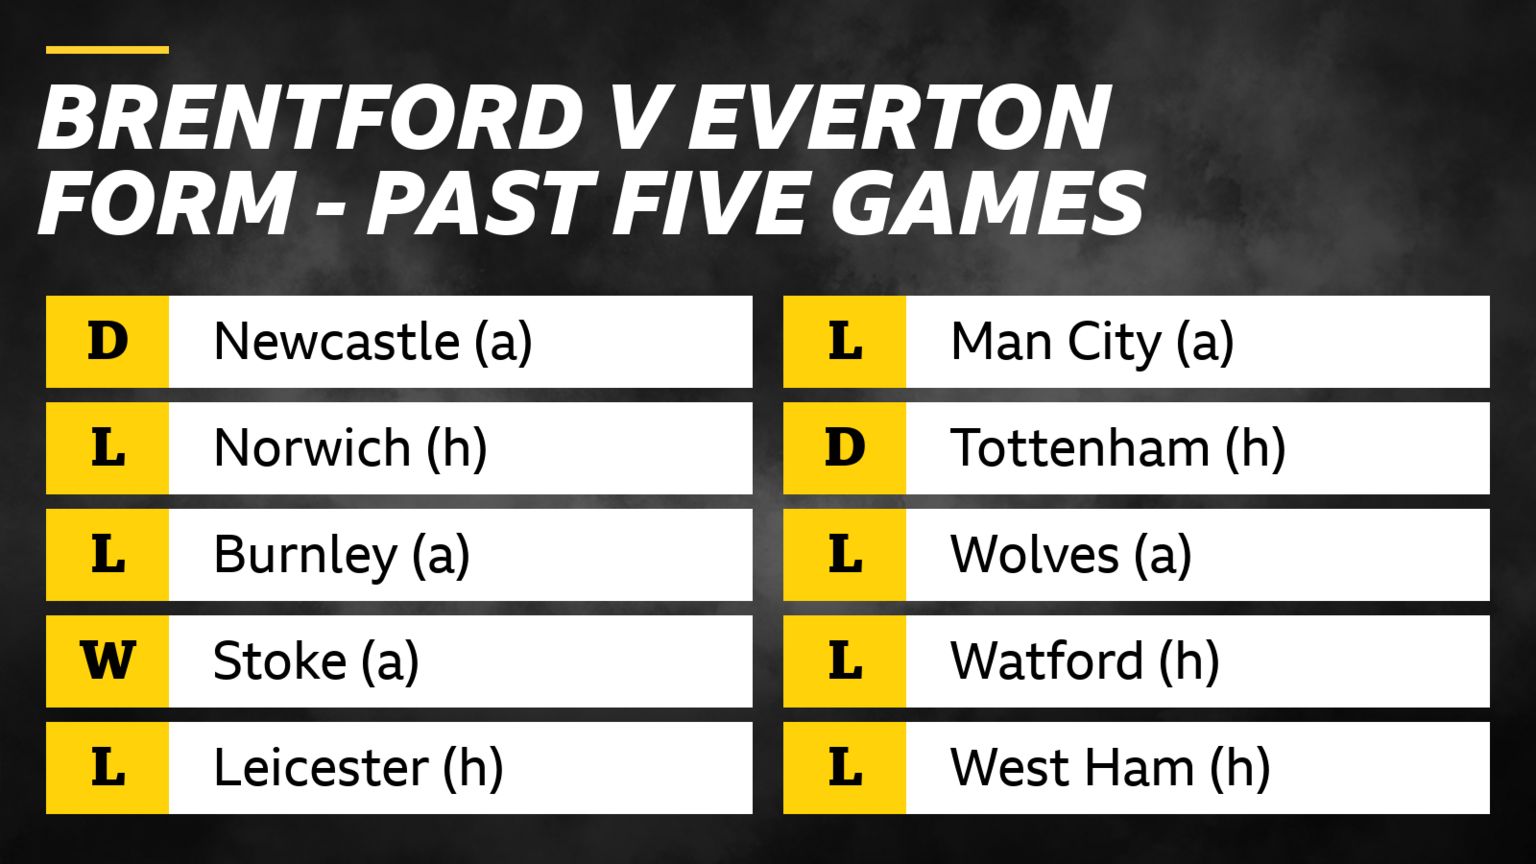 Brentford v Everton form in past 5 games: Brentford: draw v Newcastle, losses v Norwich and Burnley, win v Stoke, loss v Leicester. Everton - loss v Man City, draw v Tottenham, losses v Wolves, Watford and West Ham